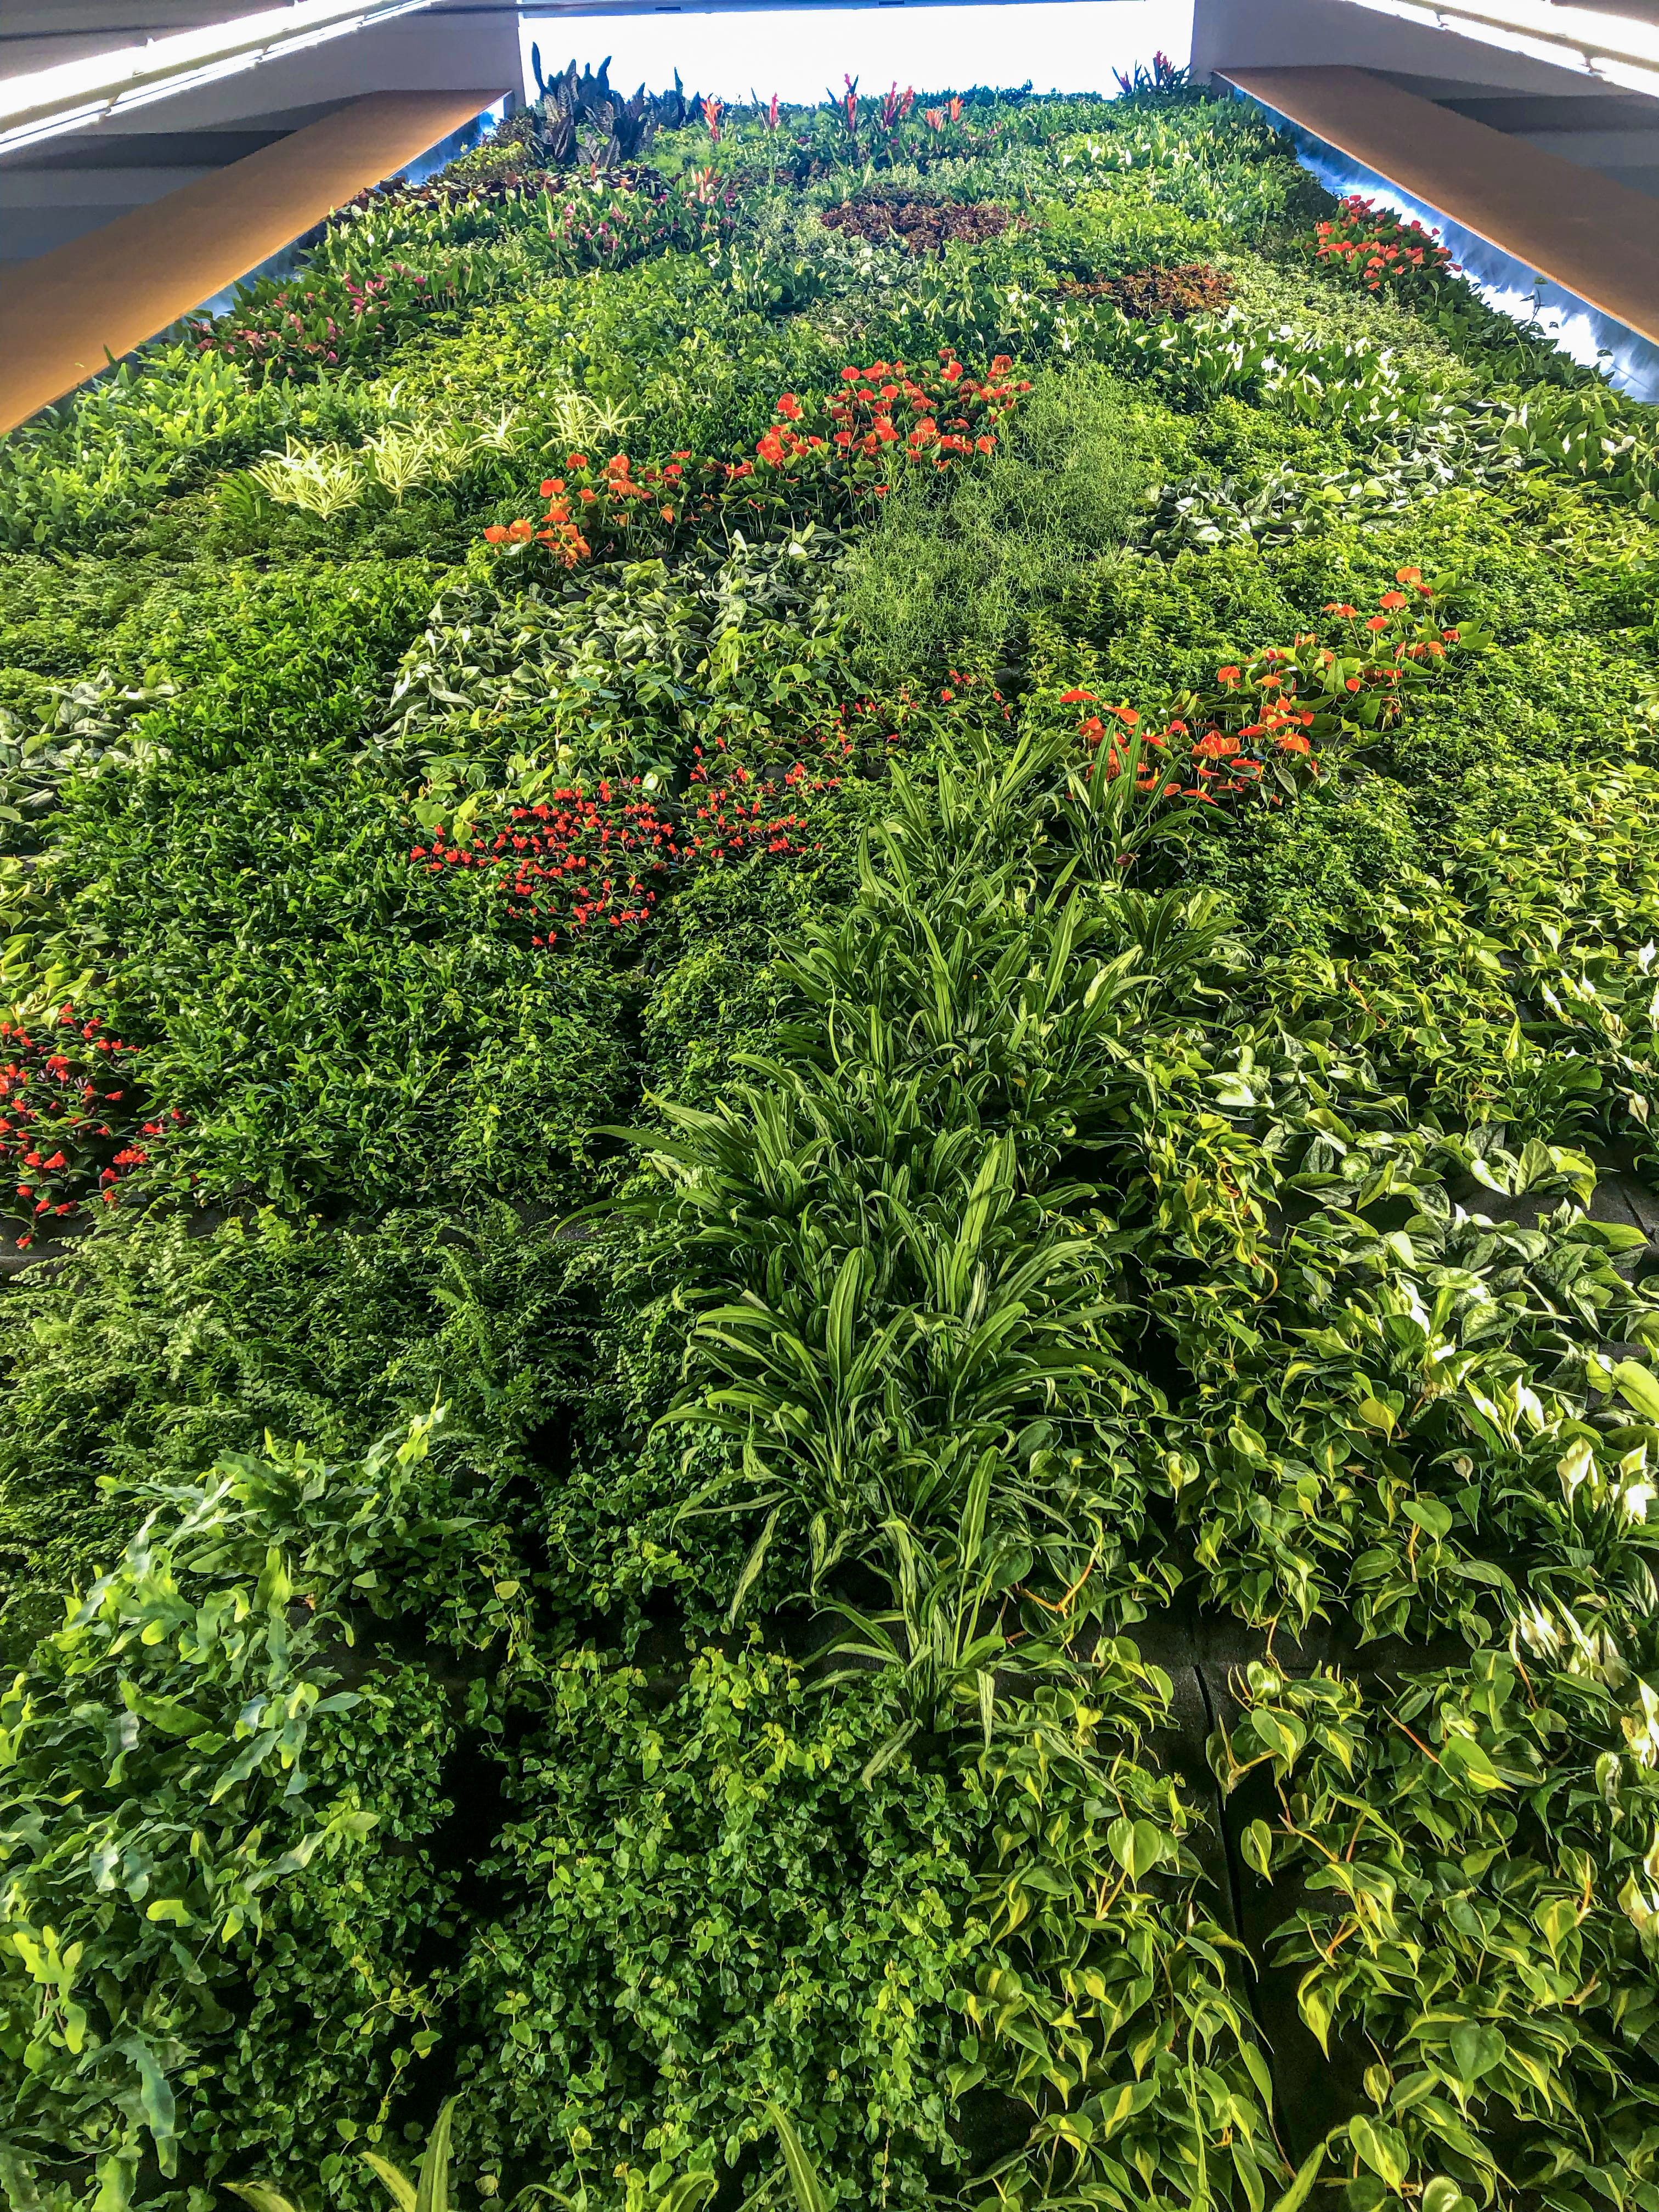 An up-close look at the Biowall plants.